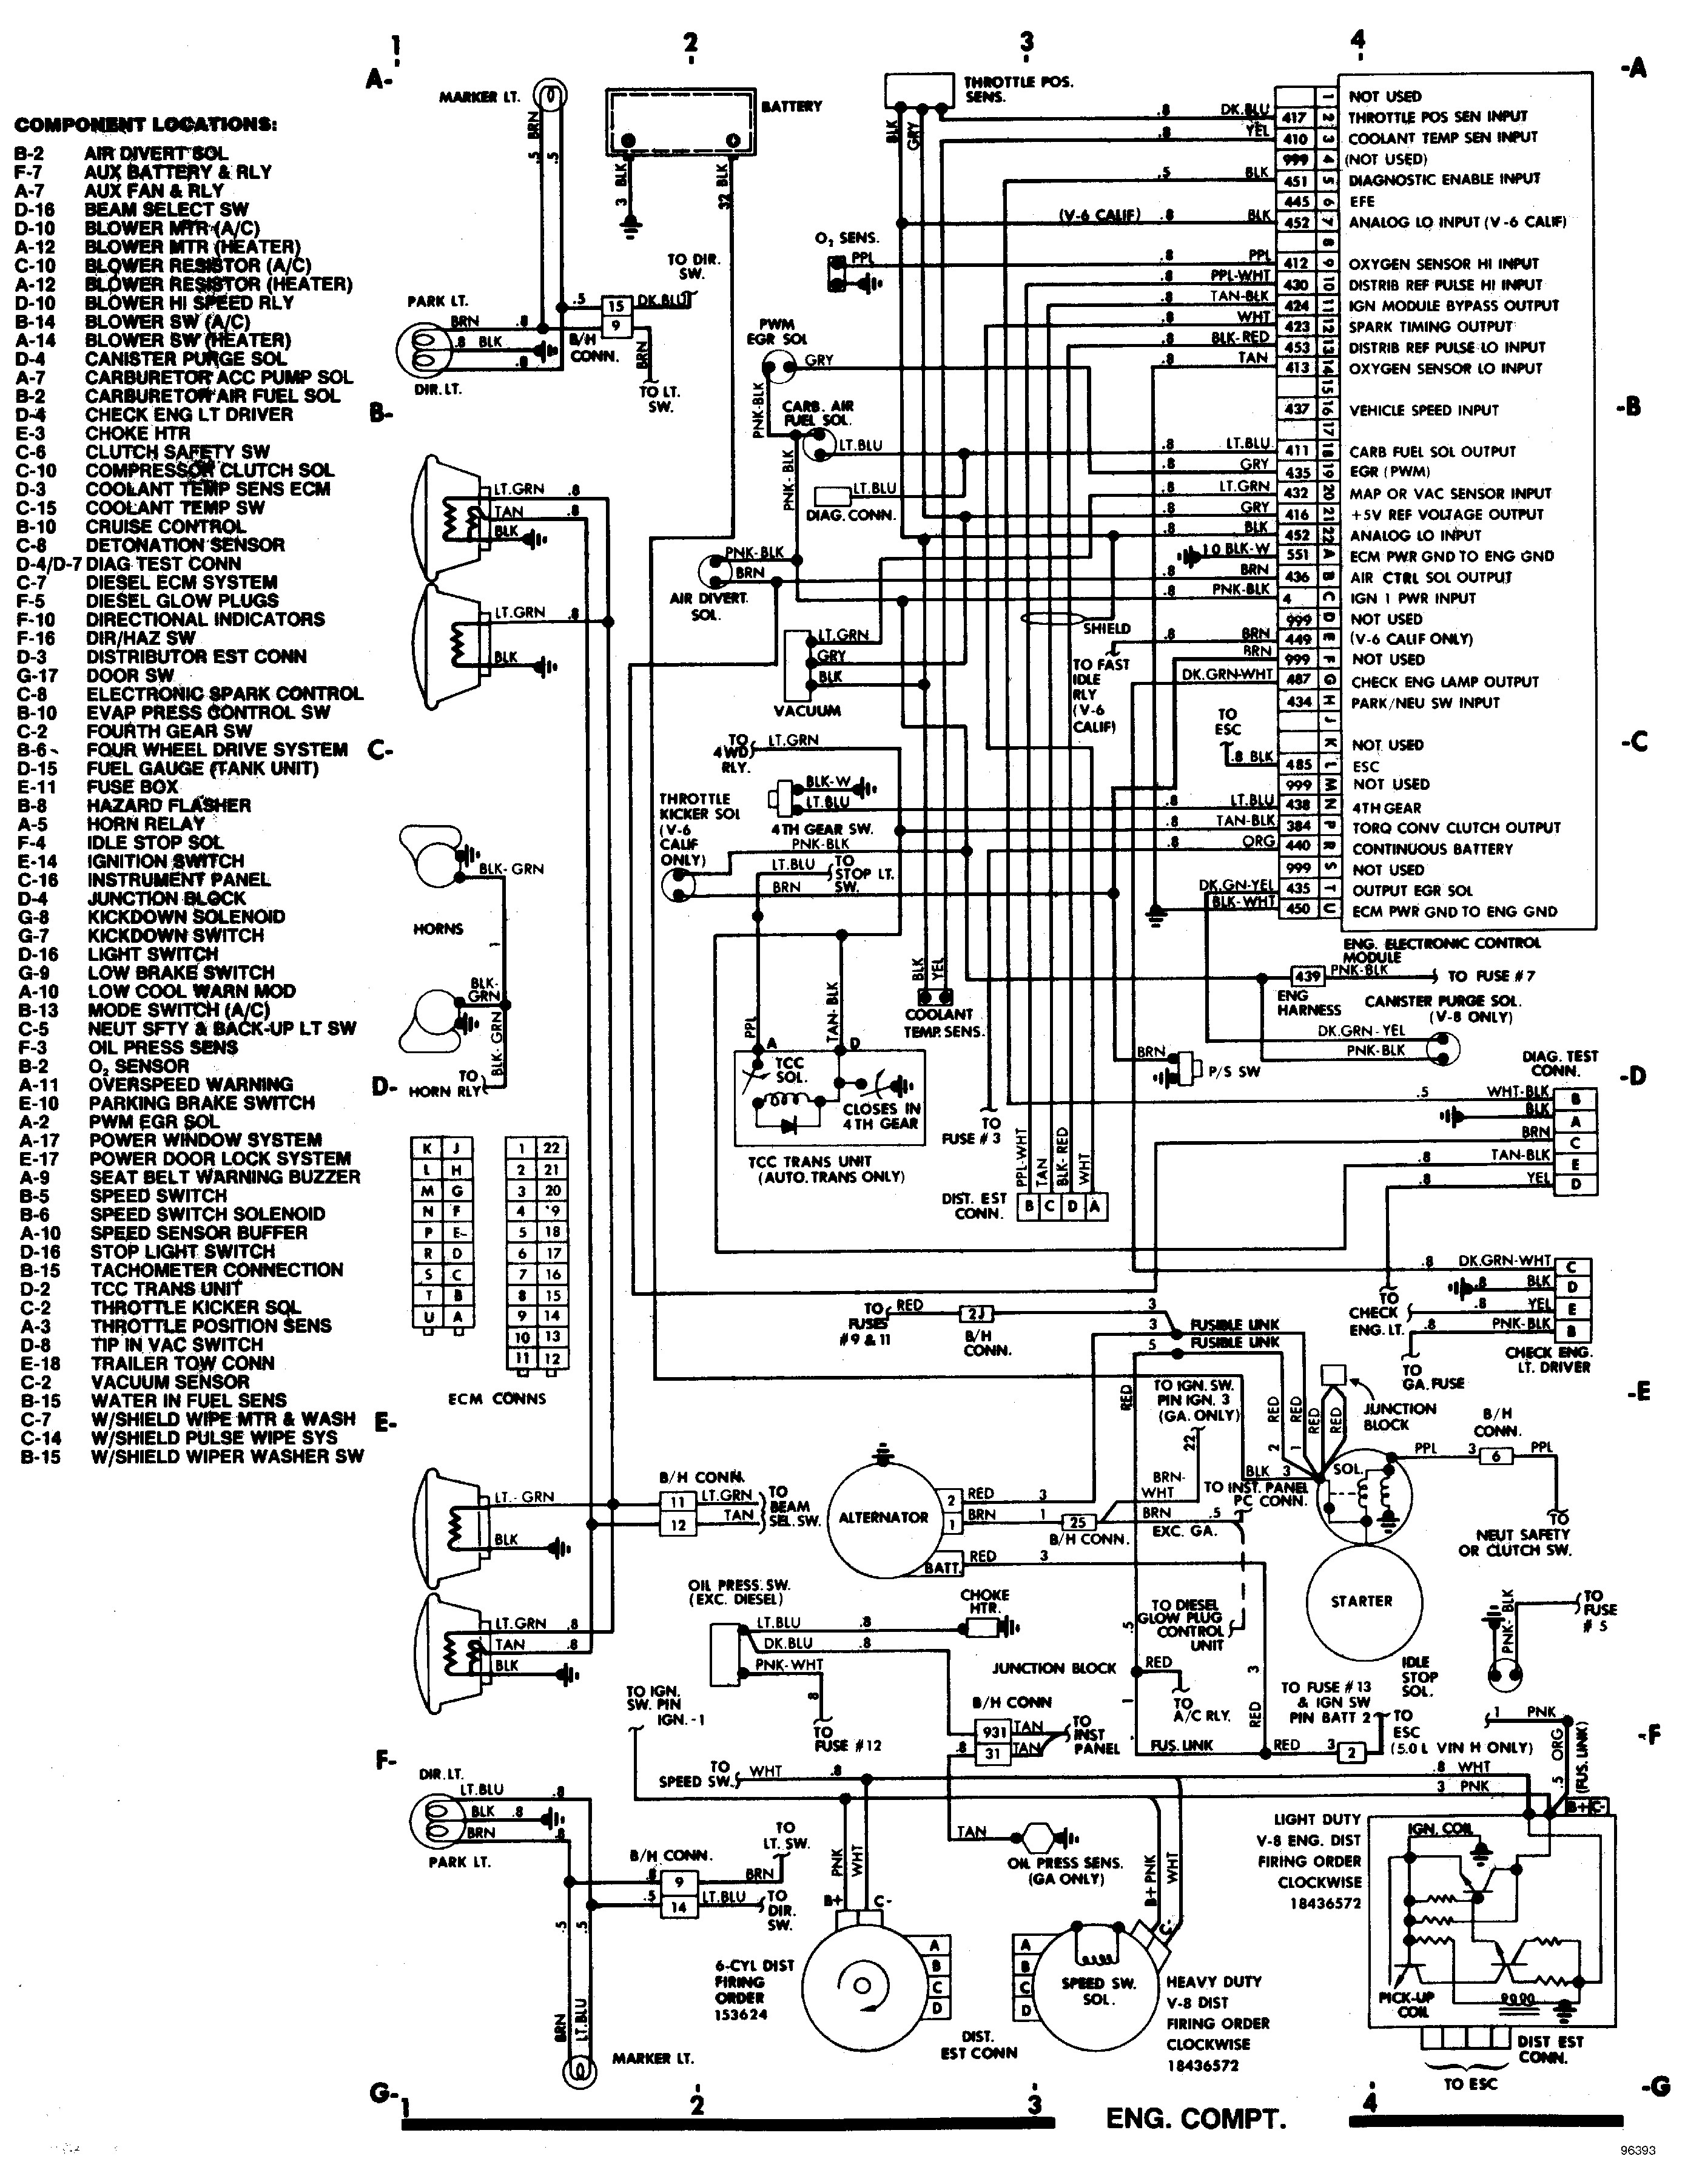 350 Chevy Engine Diagram 78 Chevy Starter Diagram Wiring Diagram Of 350 Chevy Engine Diagram